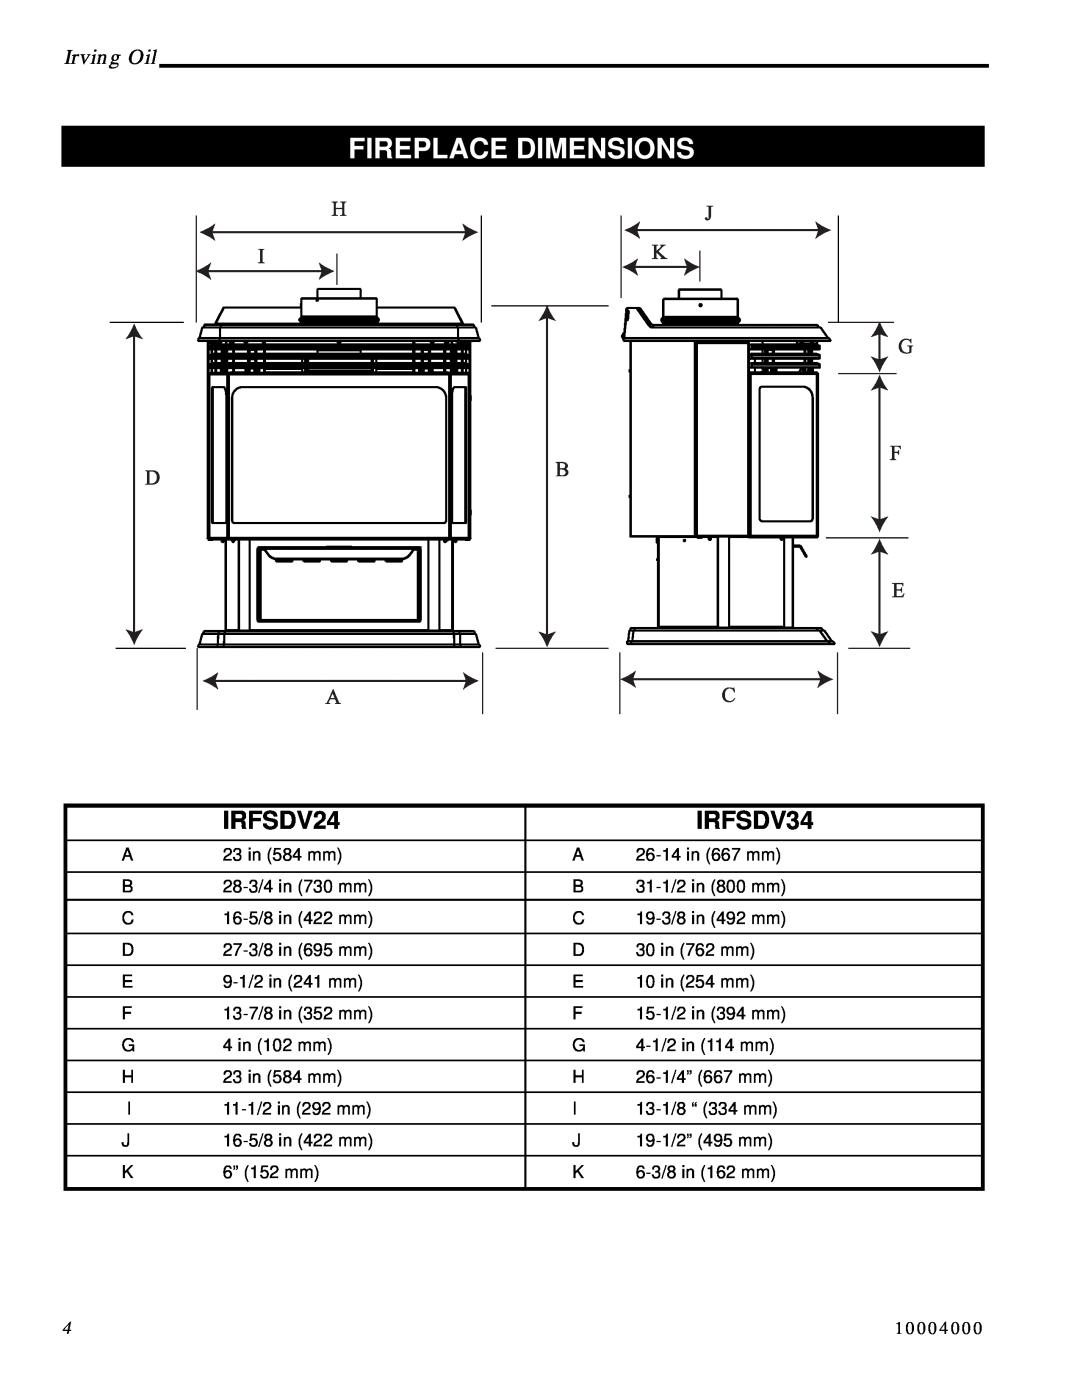 Vermont Casting IRFSDV34 installation instructions IRFSDV24, Fireplace Dimensions, Irving Oil, 10004000 